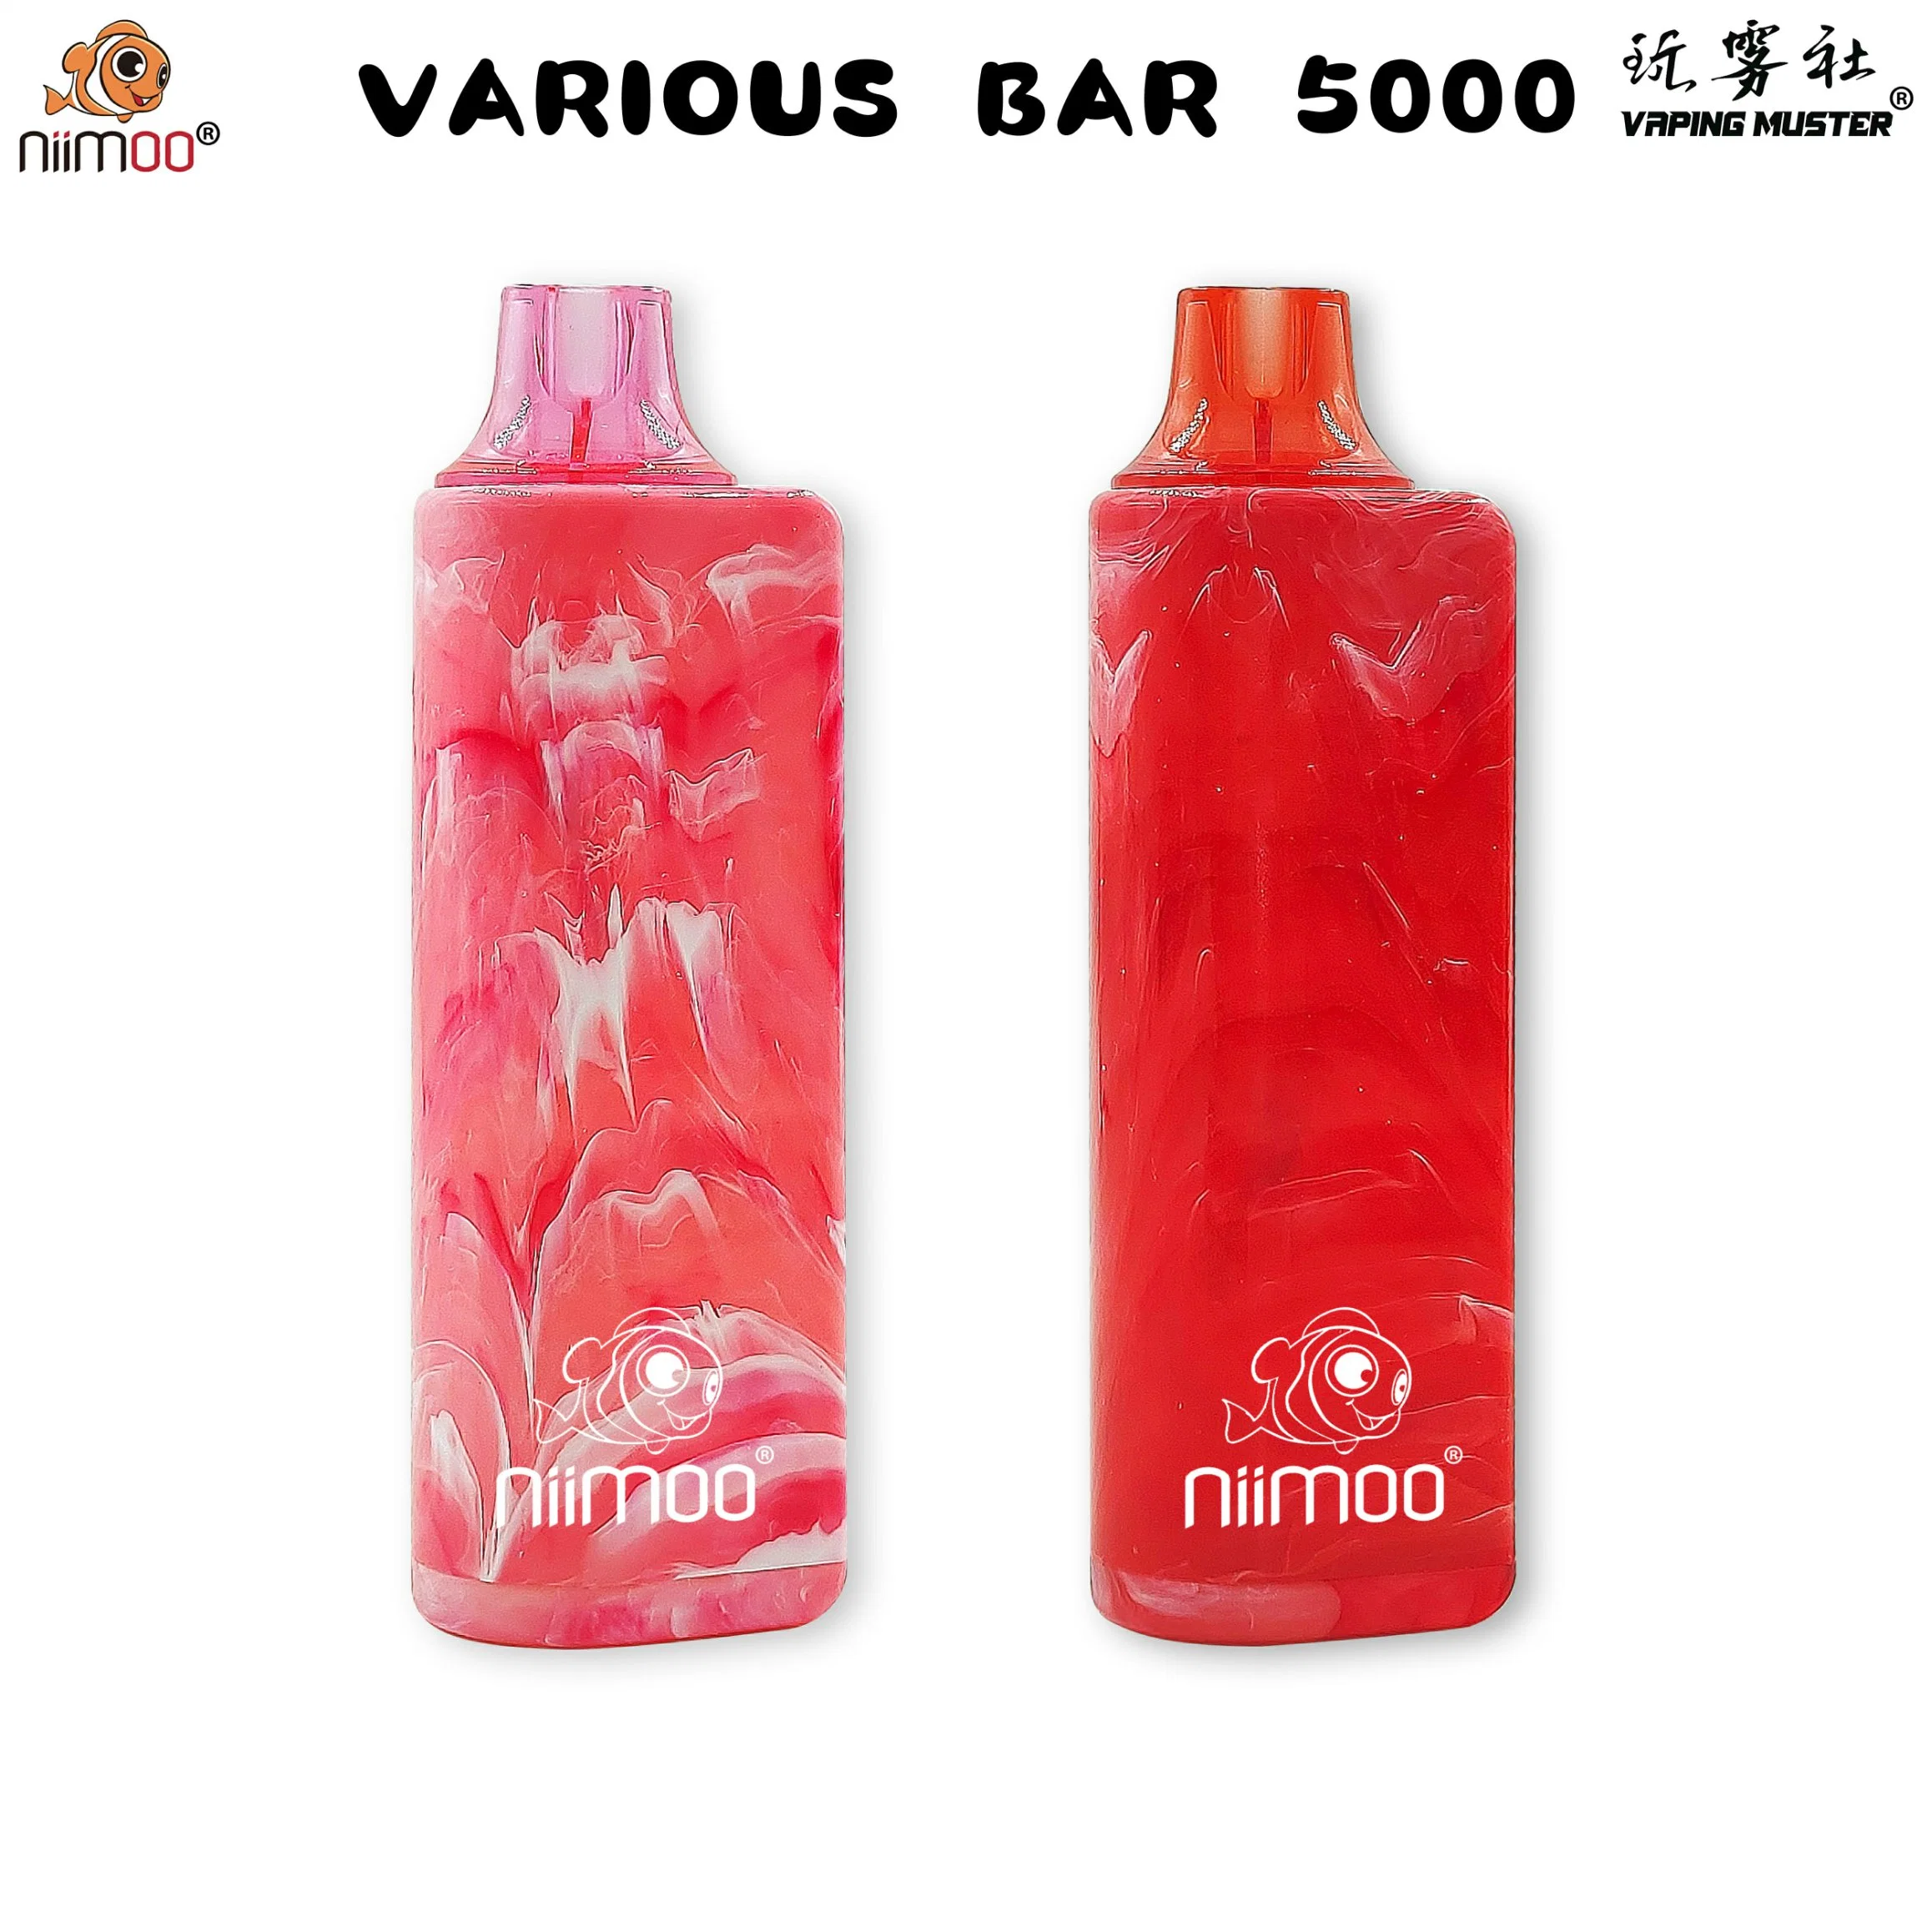 Wholesale Price Vapes Rechargeable Disposable E Cigarette Vape Pen Niimoo Various Bar 5000 Puffs Vaporizer